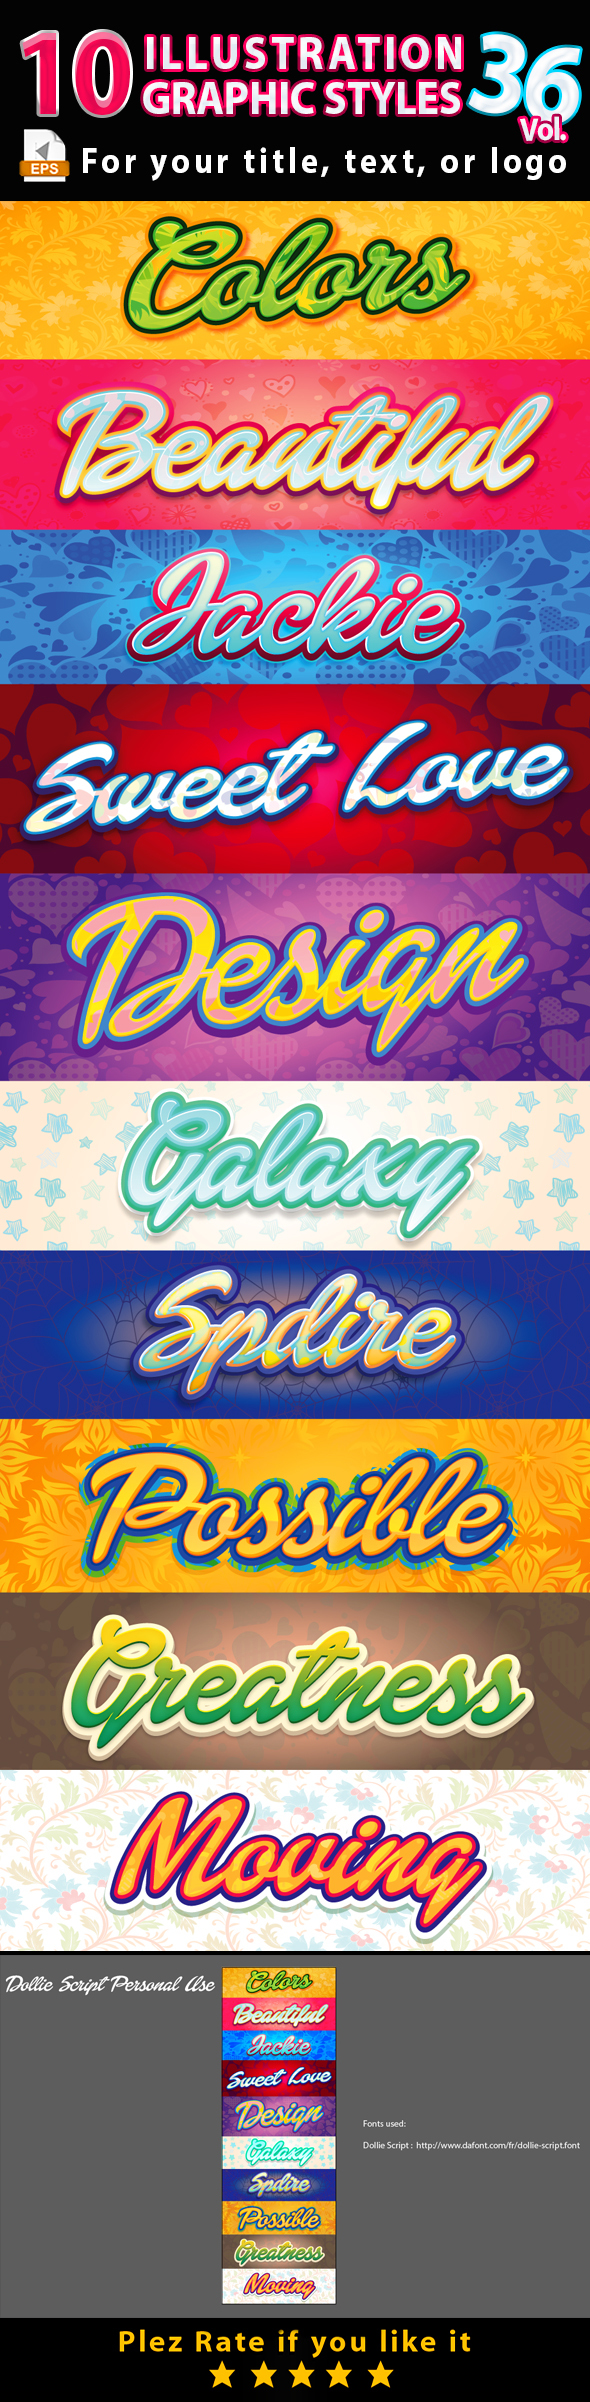 graphic styles illustrator download